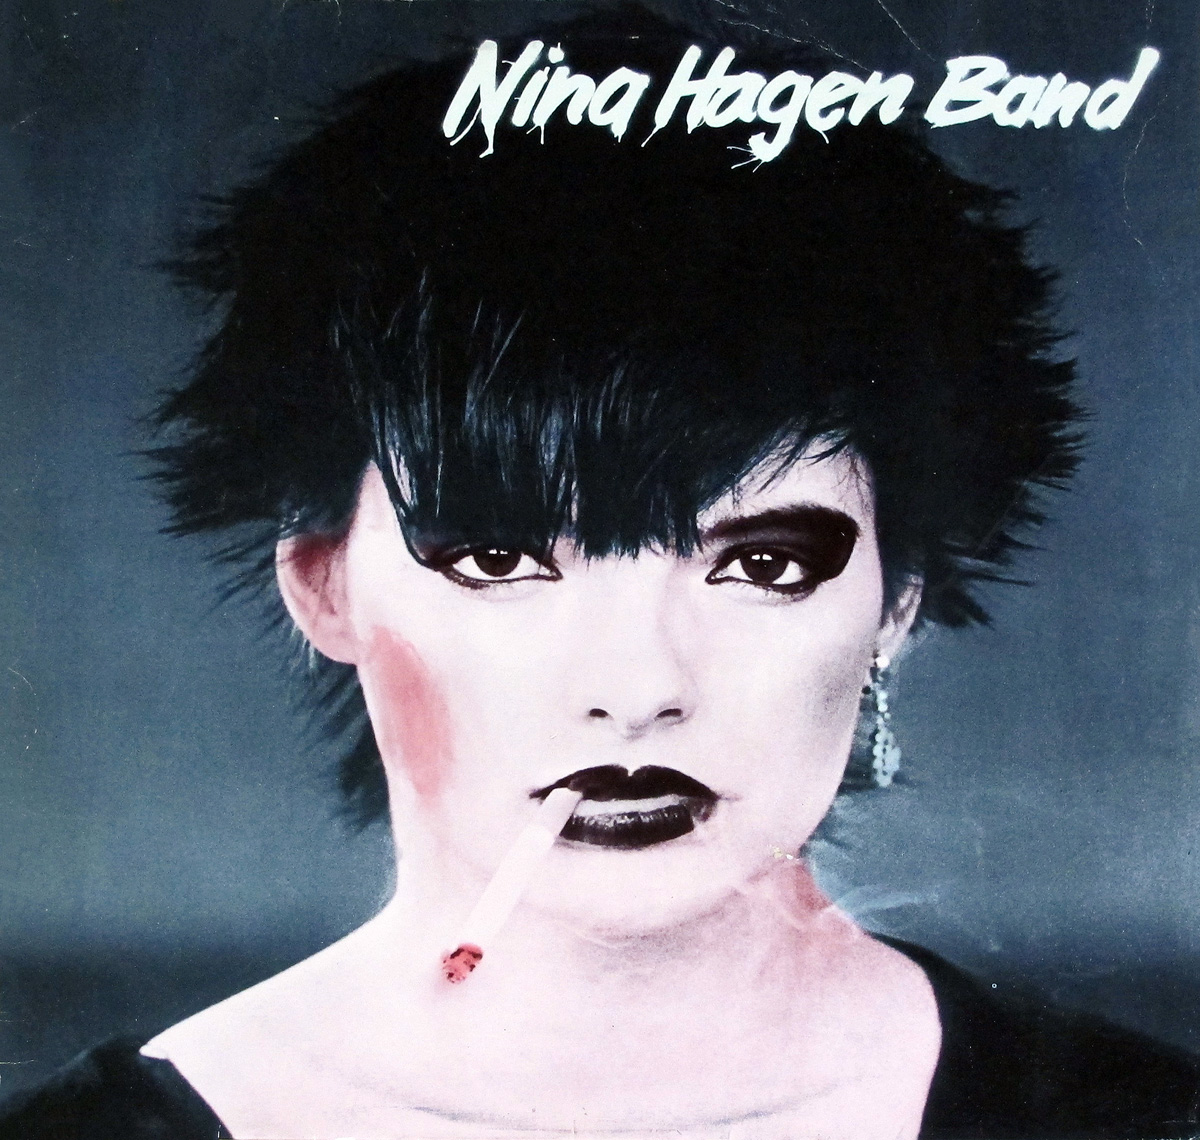 NINA HAGEN BAND SELF-TITLED 12" LP VINYL